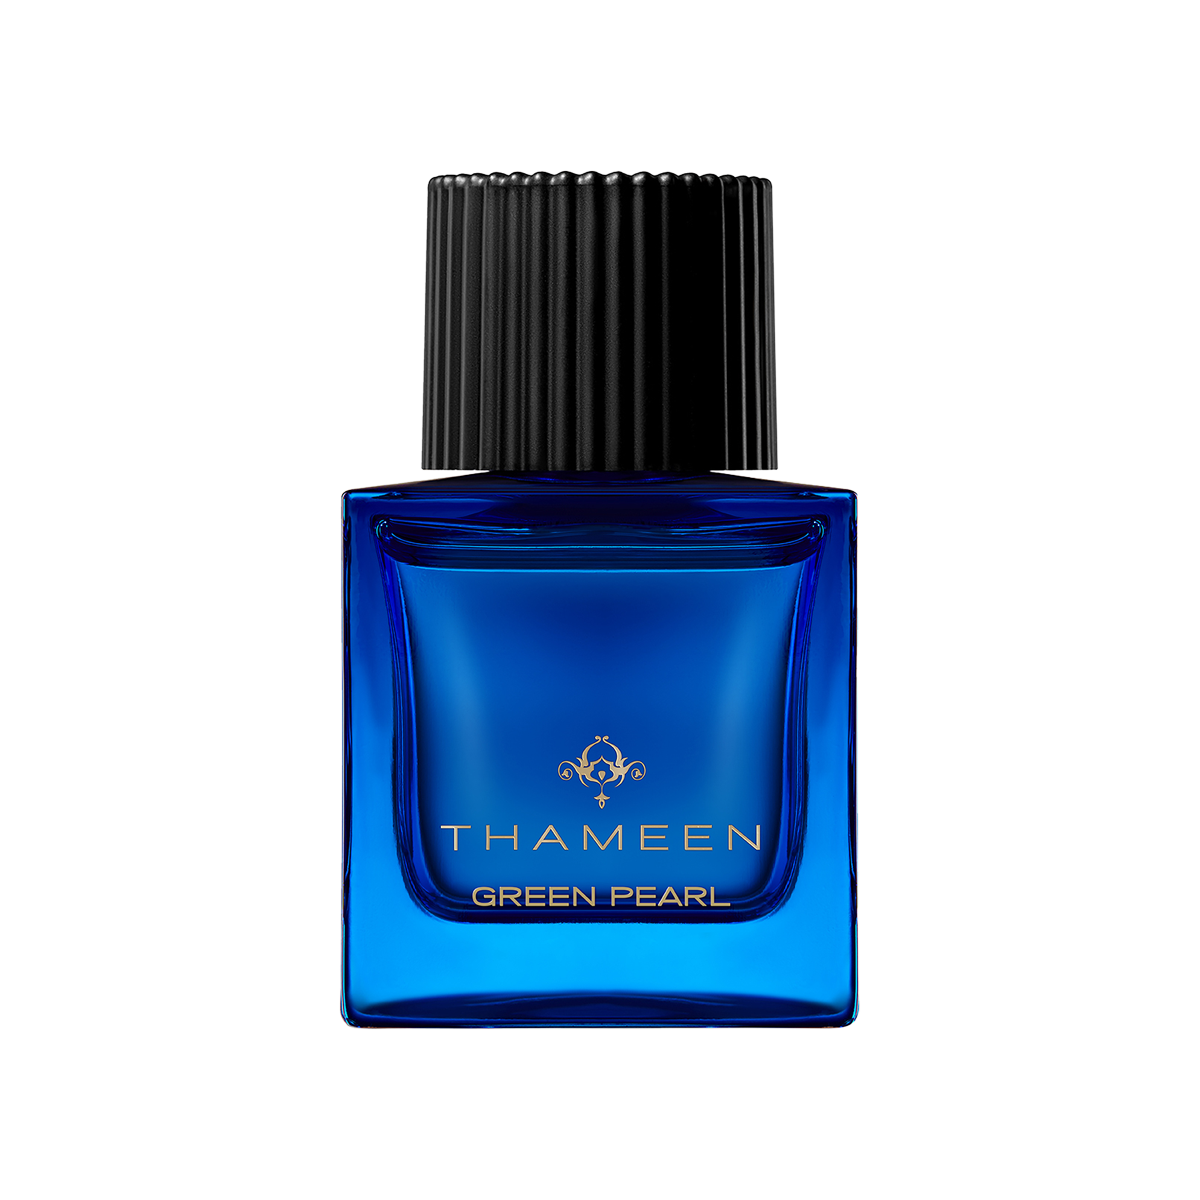 Thameen London - Green Pearl Extrait de Parfum